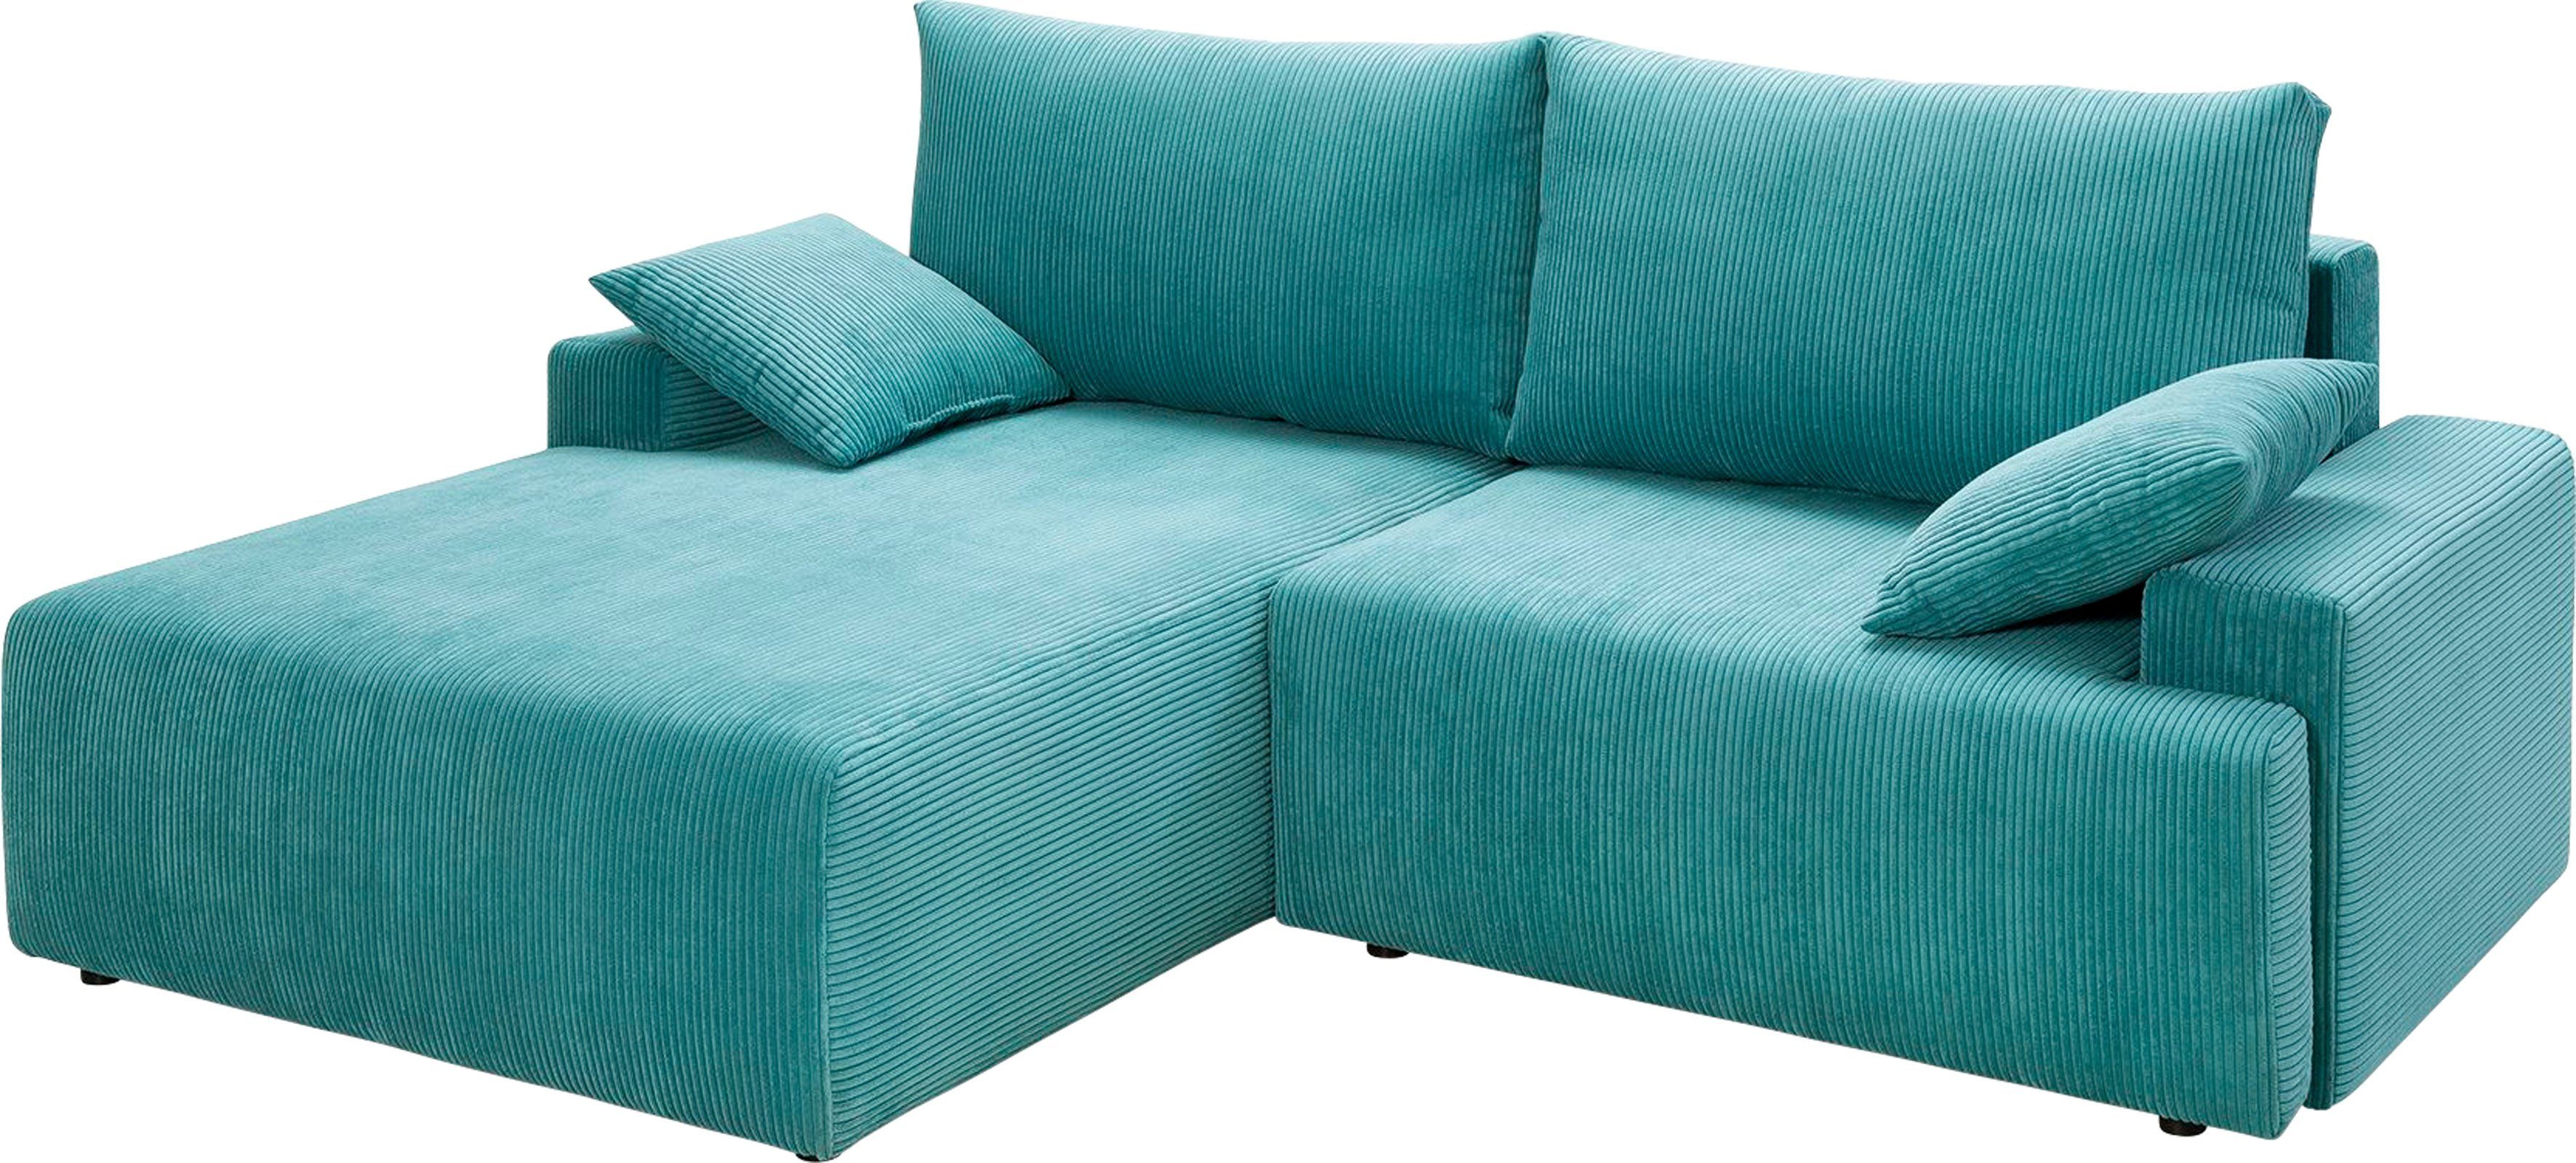 Bettkasten in Ecksofa fashion exxpo Orinoko, verschiedenen Bettfunktion sky - inklusive und Cord-Farben sofa